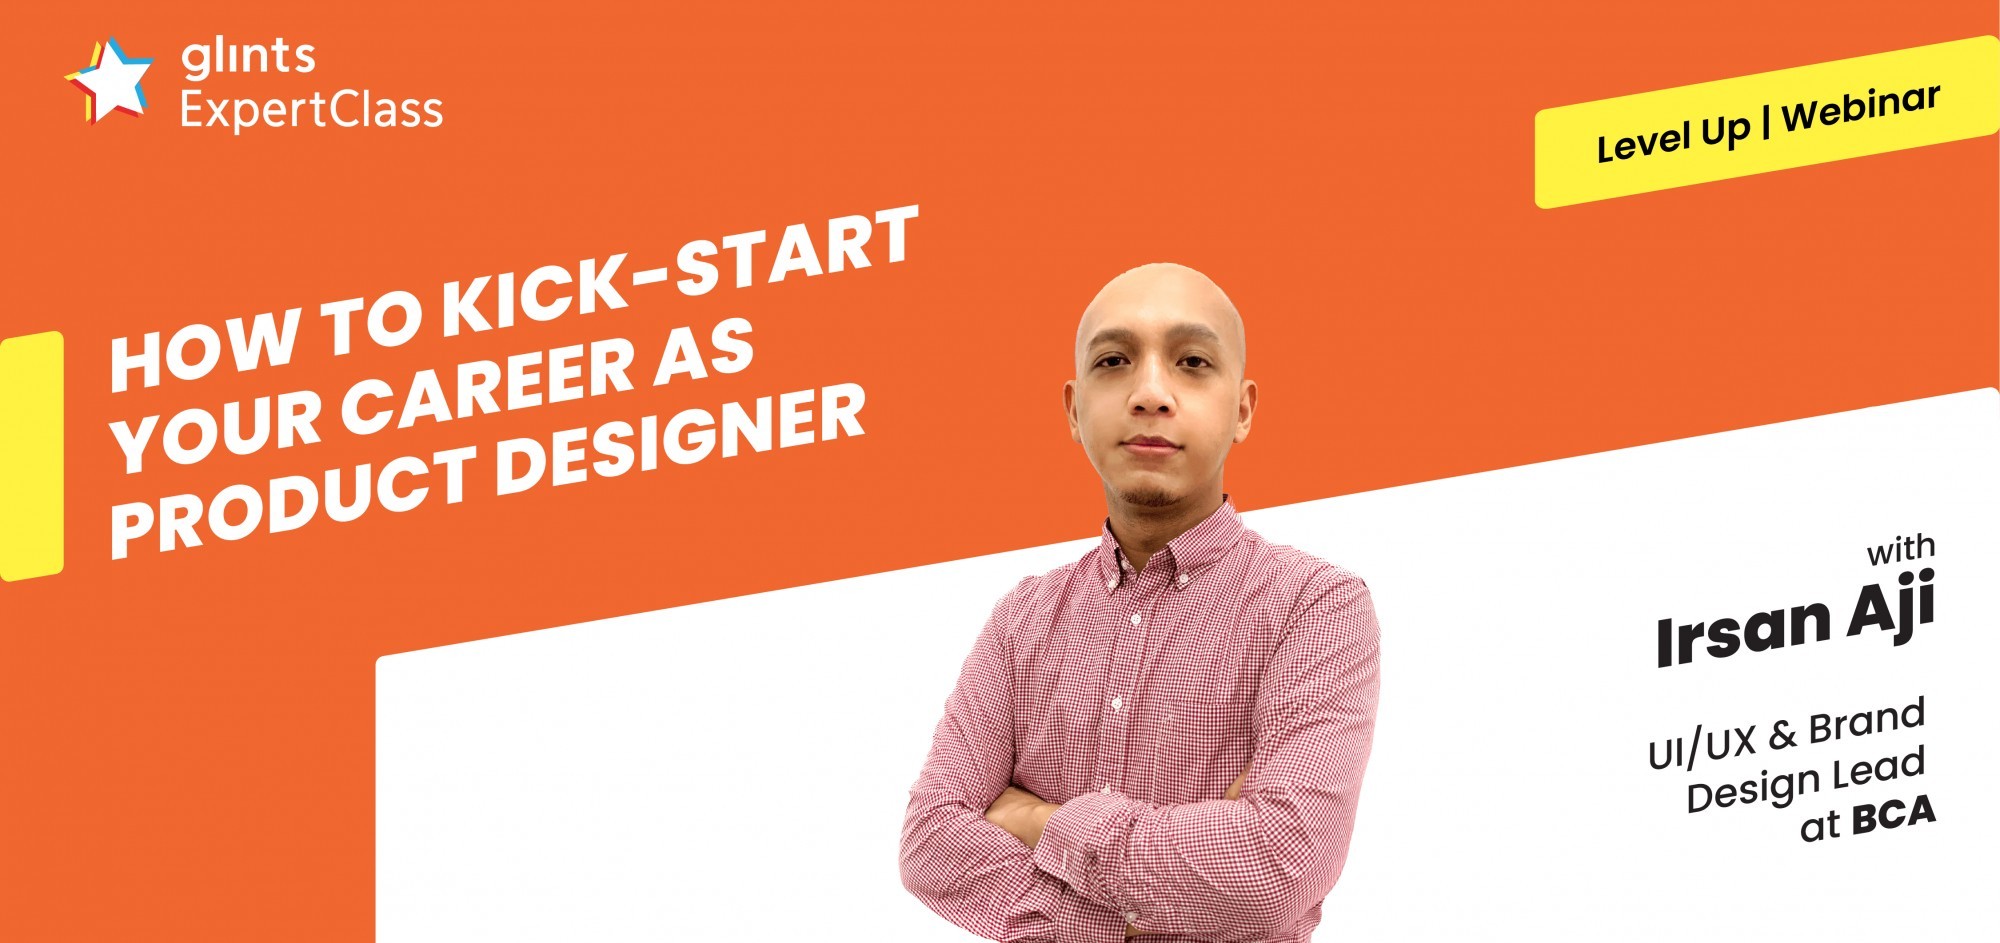 [Online Glints Expert Class] How to Kickstart Your Career As Product Designer